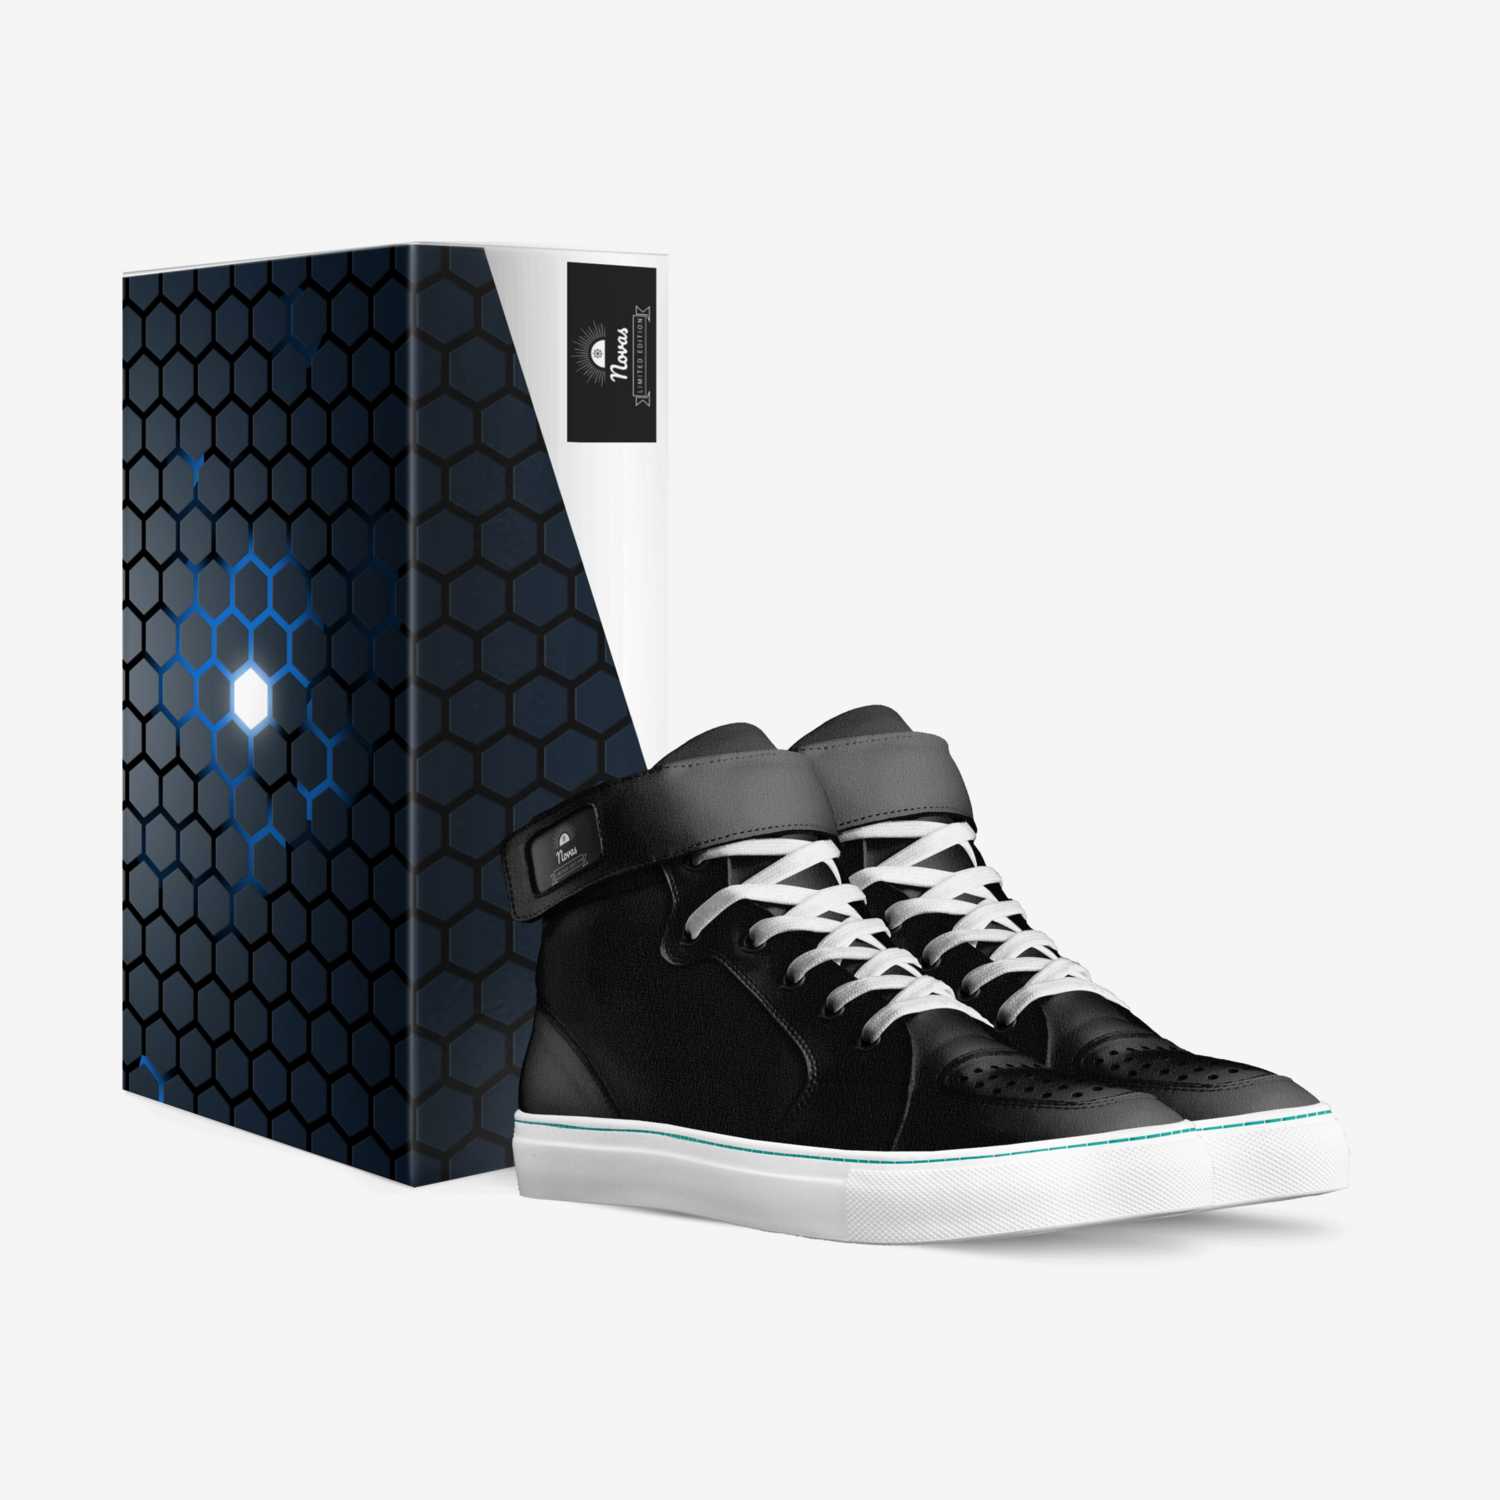 Novas custom made in Italy shoes by Carlos Ledezma | Box view